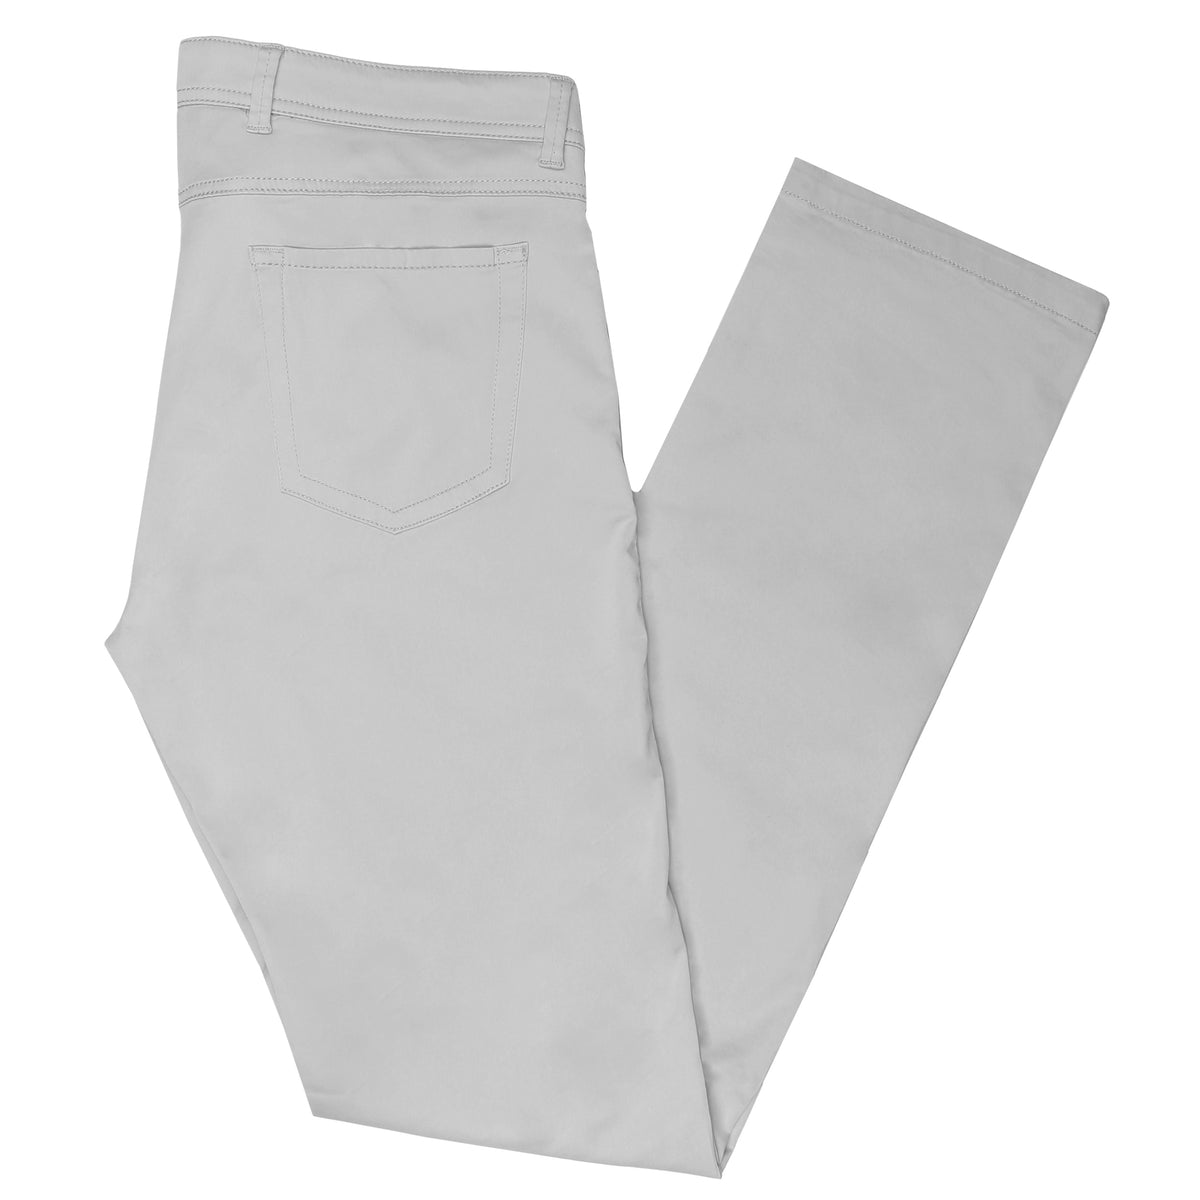 *** FINAL SALE *** Crescent Comfort Ultra Soft Stretch 5-Pocket Pant - Stone Grey